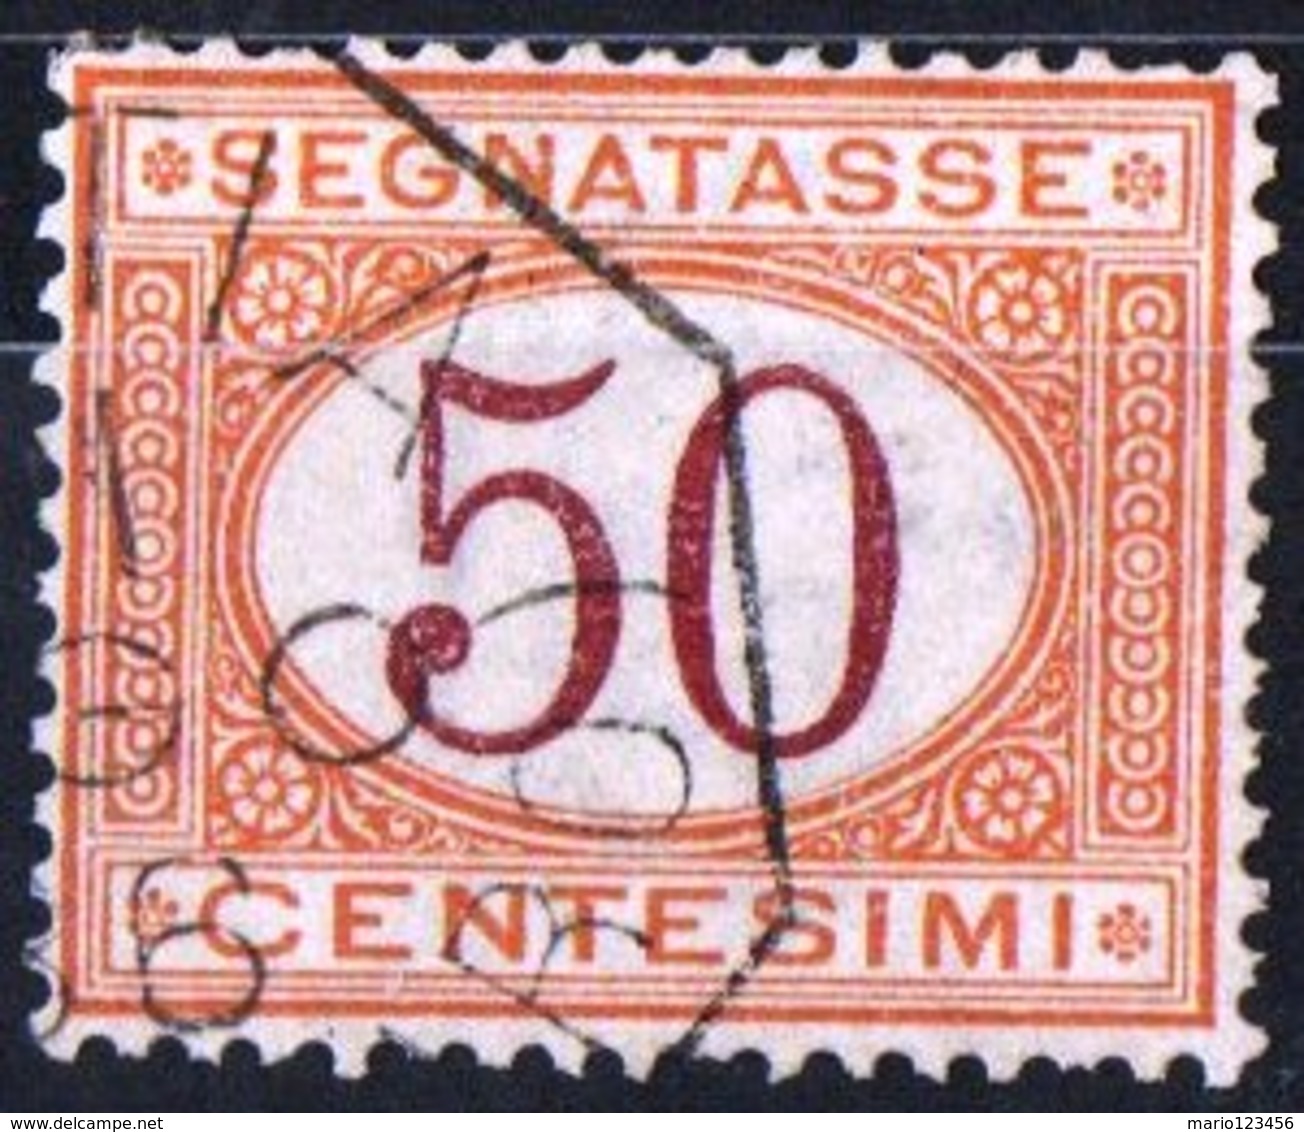 ITALIA, ITALY, SEGNATASSE, POSTAGE DUE, REGNO, 1890 FRANCOBOLLO USATO Un. S25   Michel P9b (1) - Segnatasse